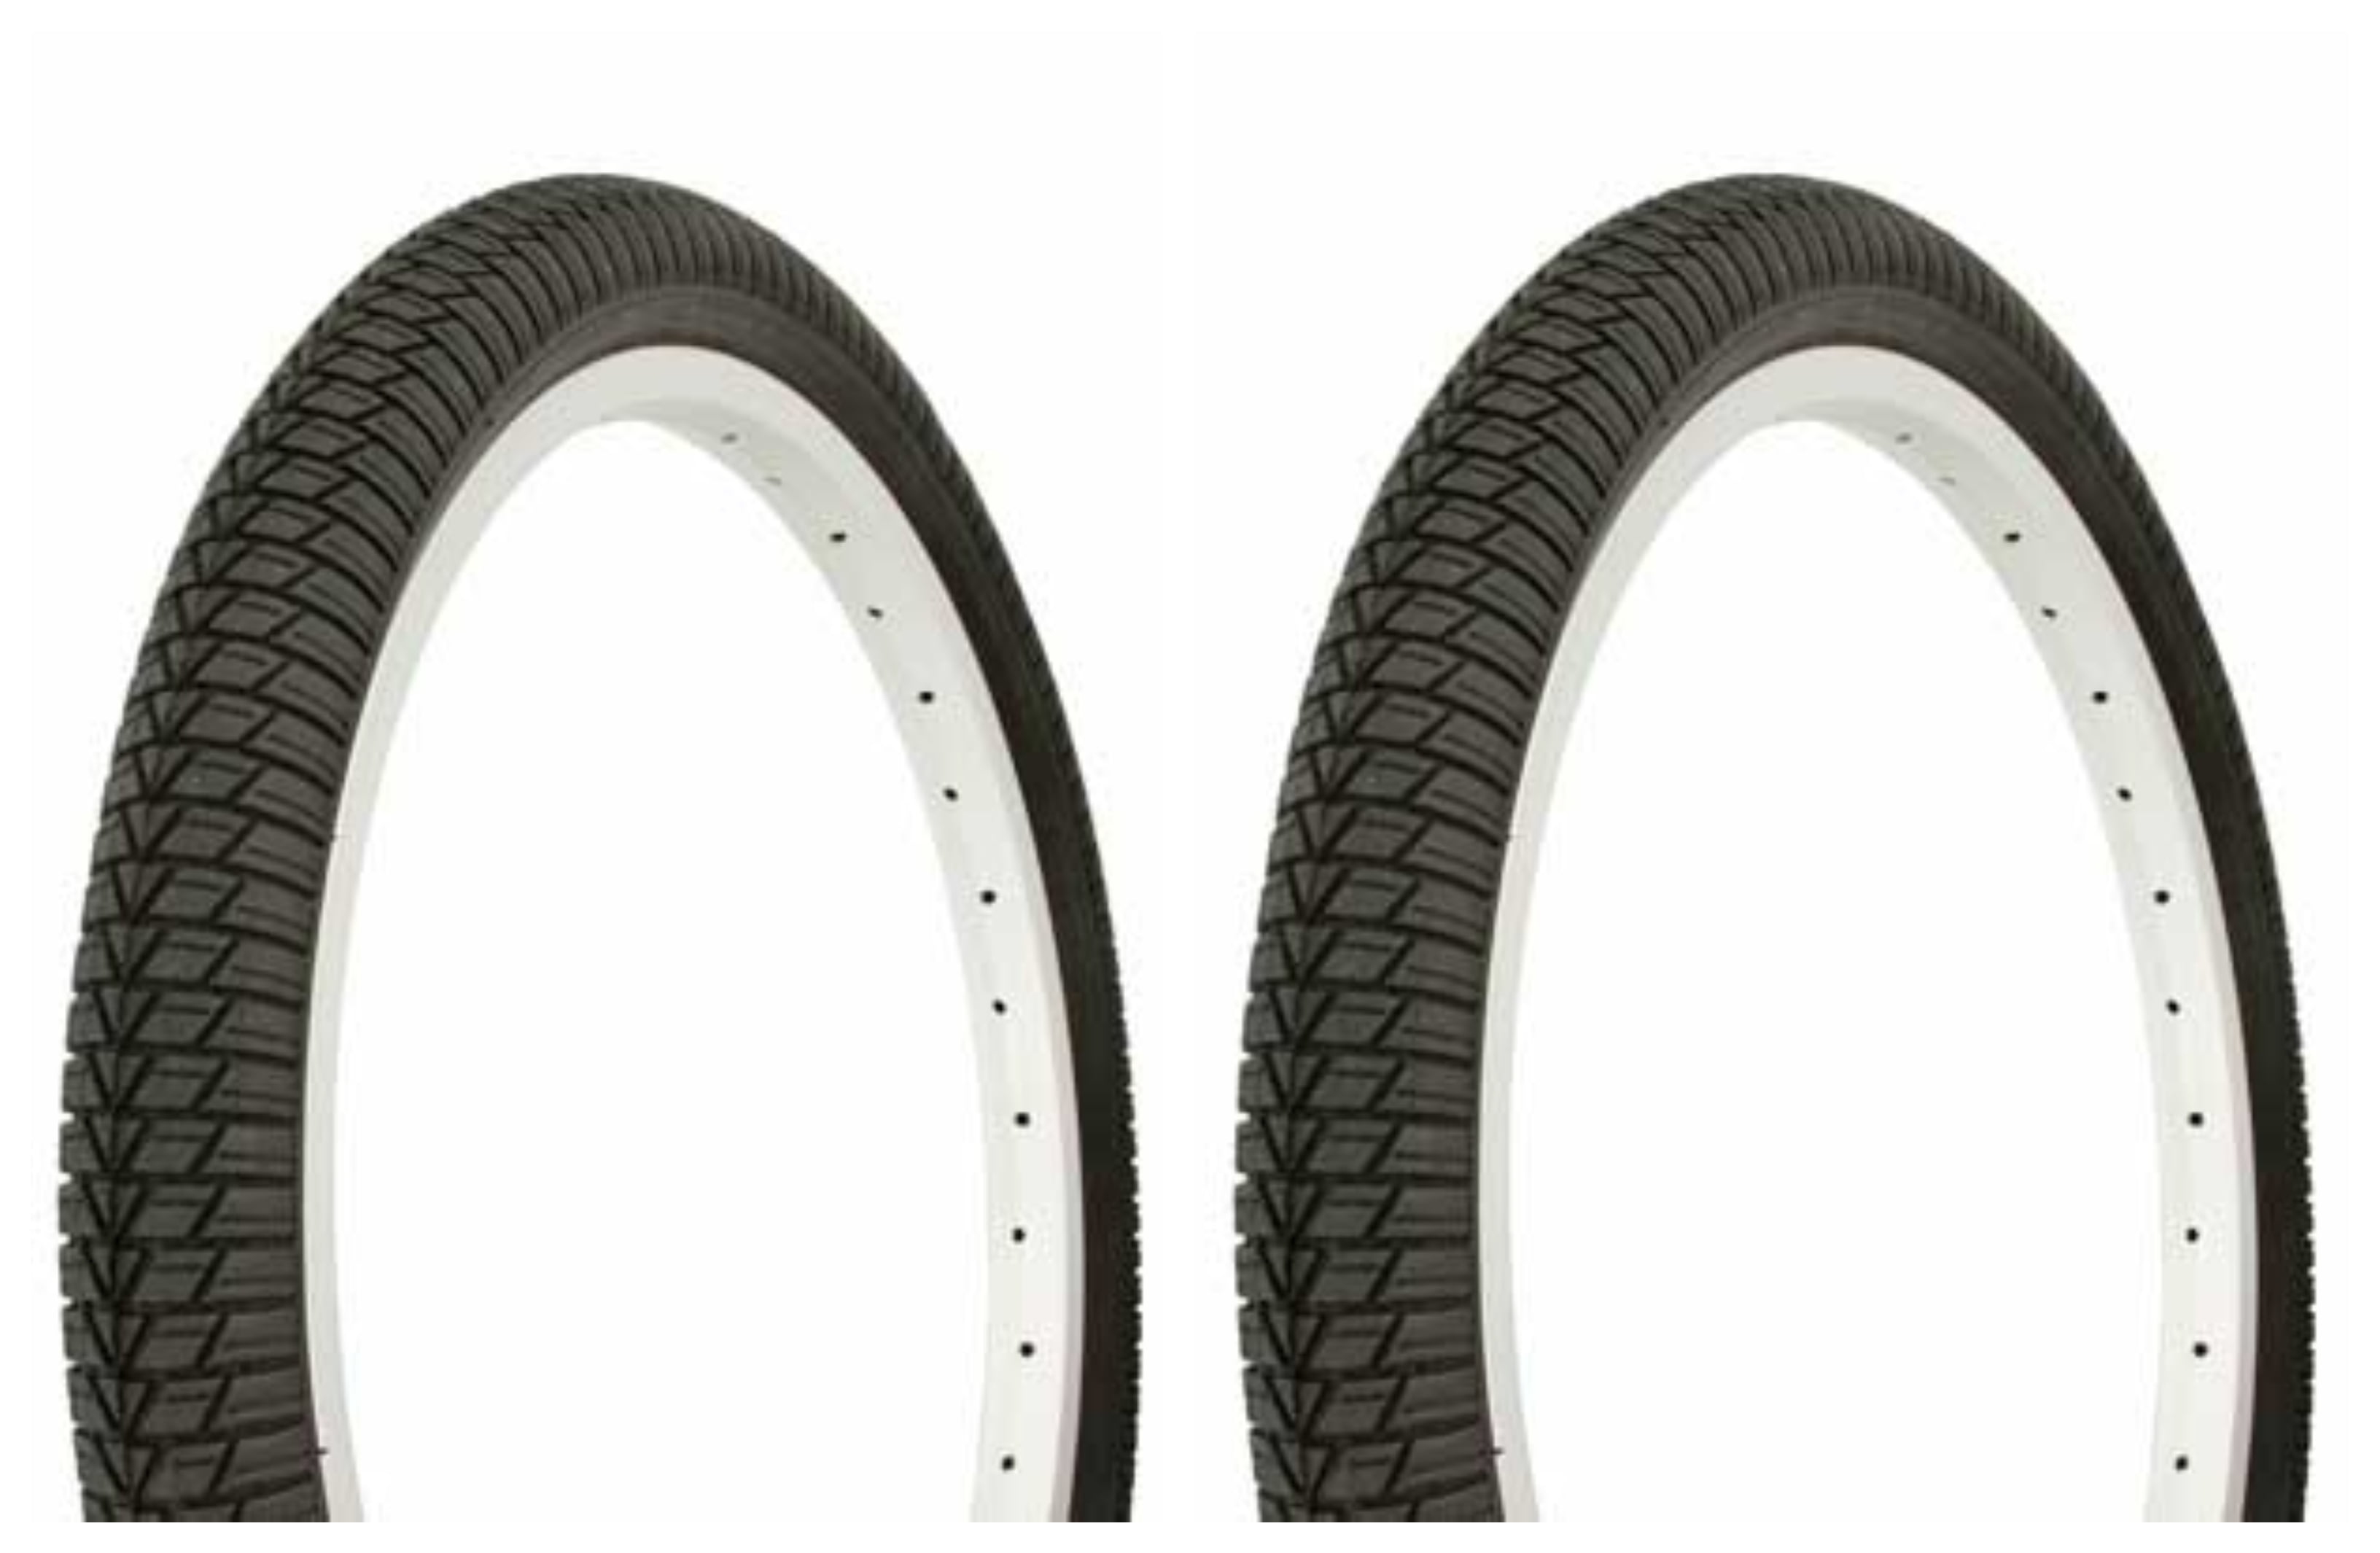 PAIR Duro Bicycle Bike Tires & Tubes 20" x 2.125" White Wall BMX COMP3 Style 